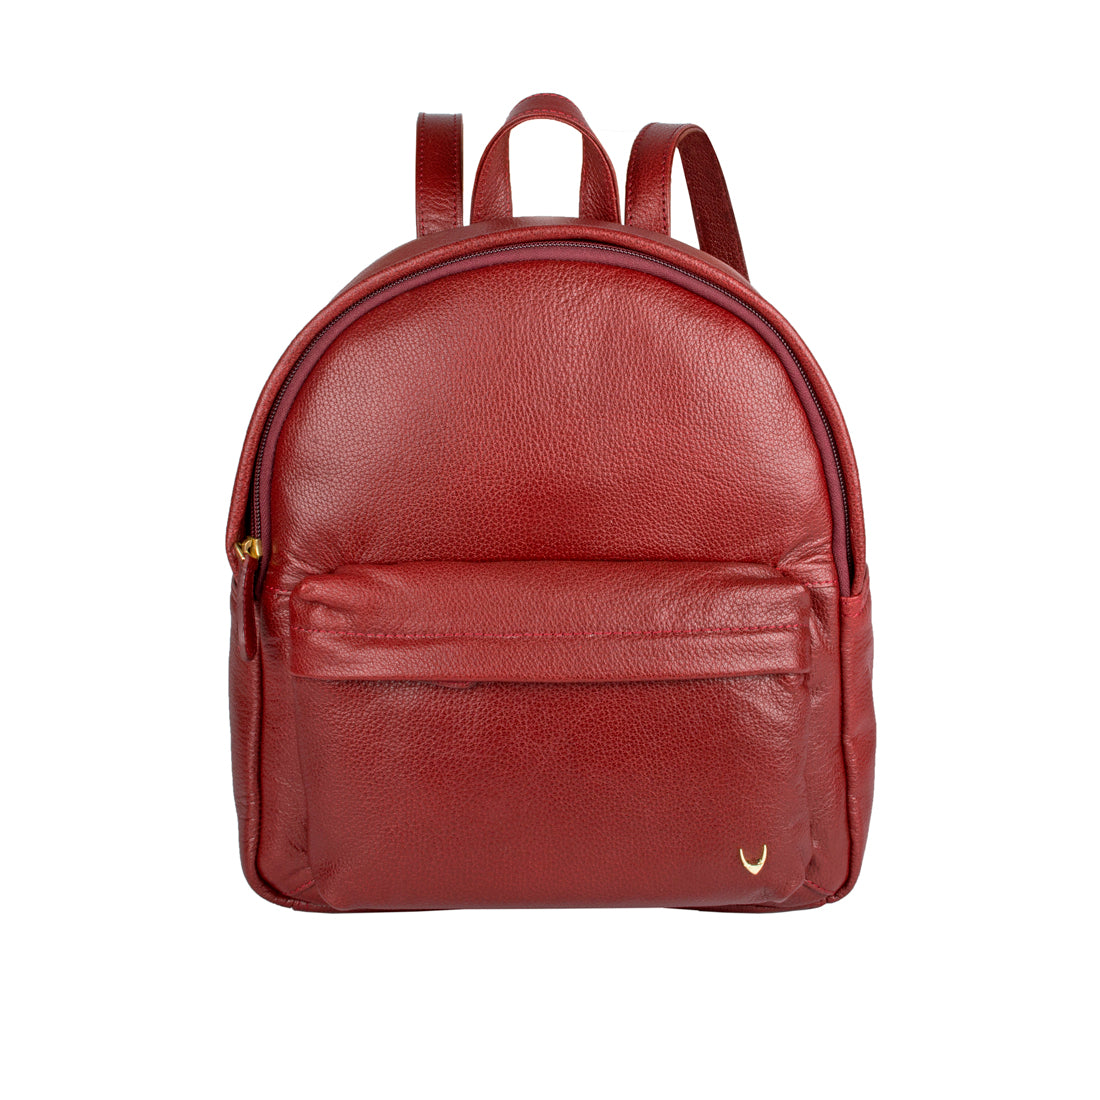 ALTOSY Small Genuine Leather Backpack Purse for Ladies Rucksack Shoulder  Bag S97 Wine Red - Walmart.com